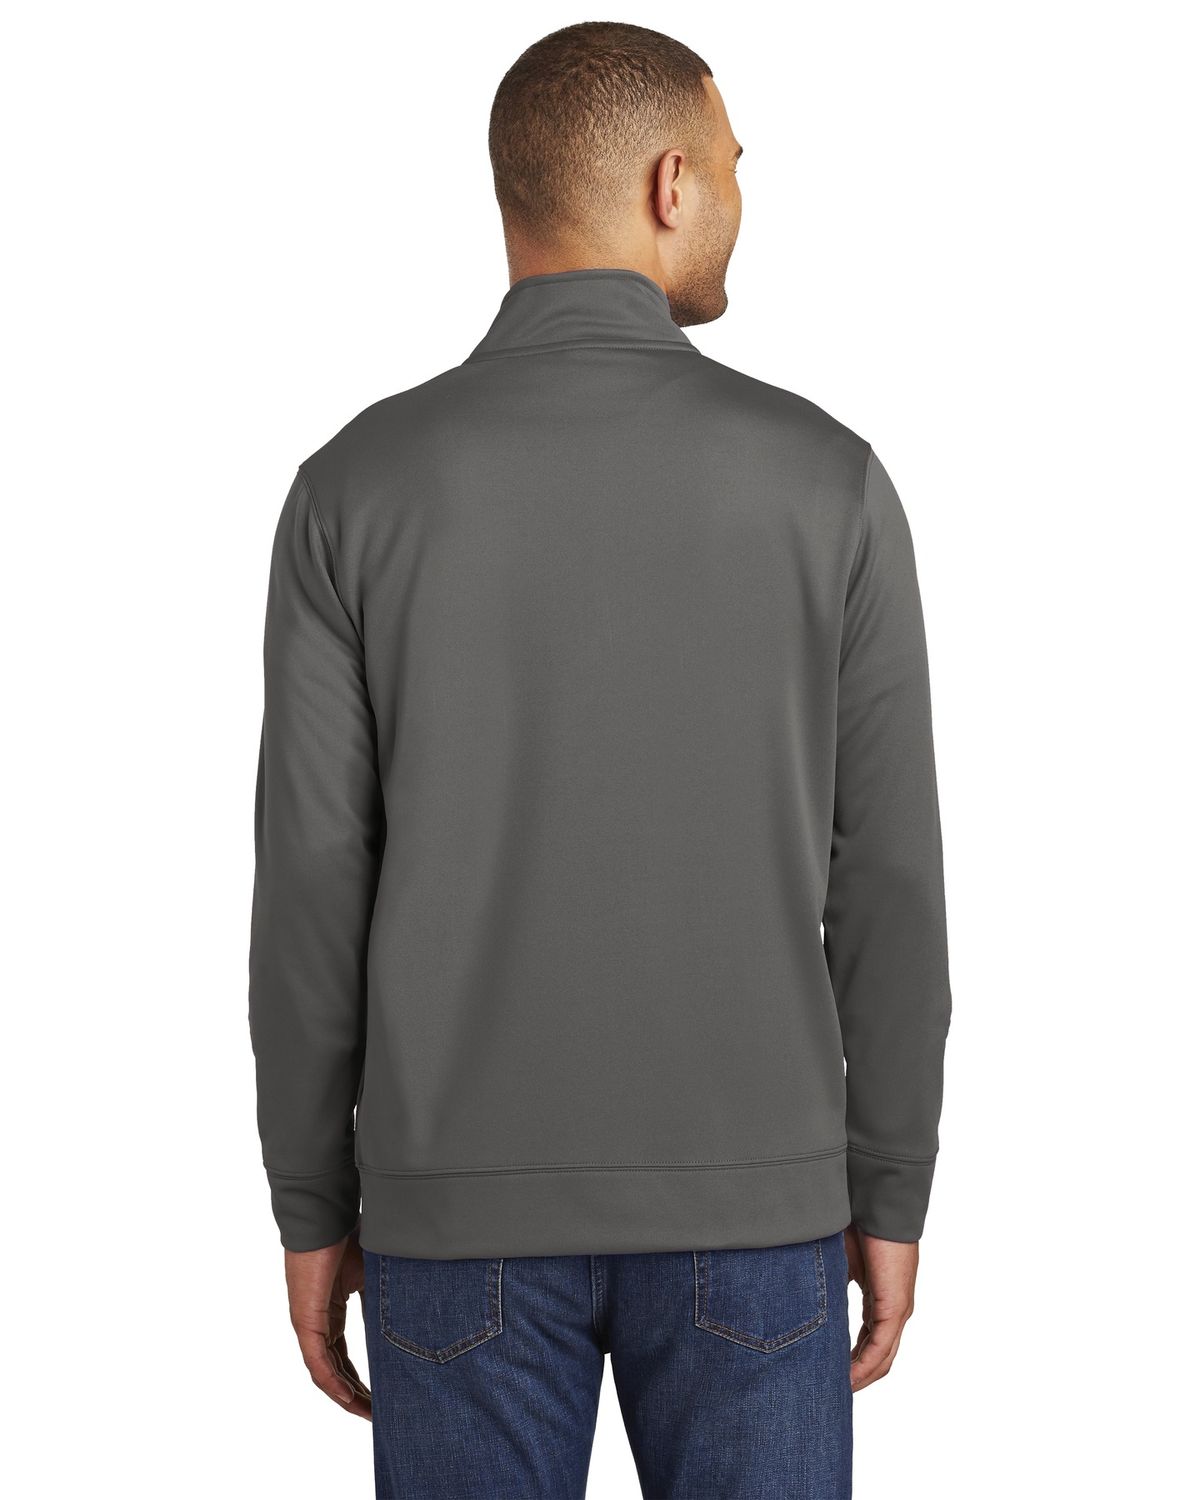 'Port & Company PC590Q Performance Fleece 1/4 Zip Pullover Sweatshirt'